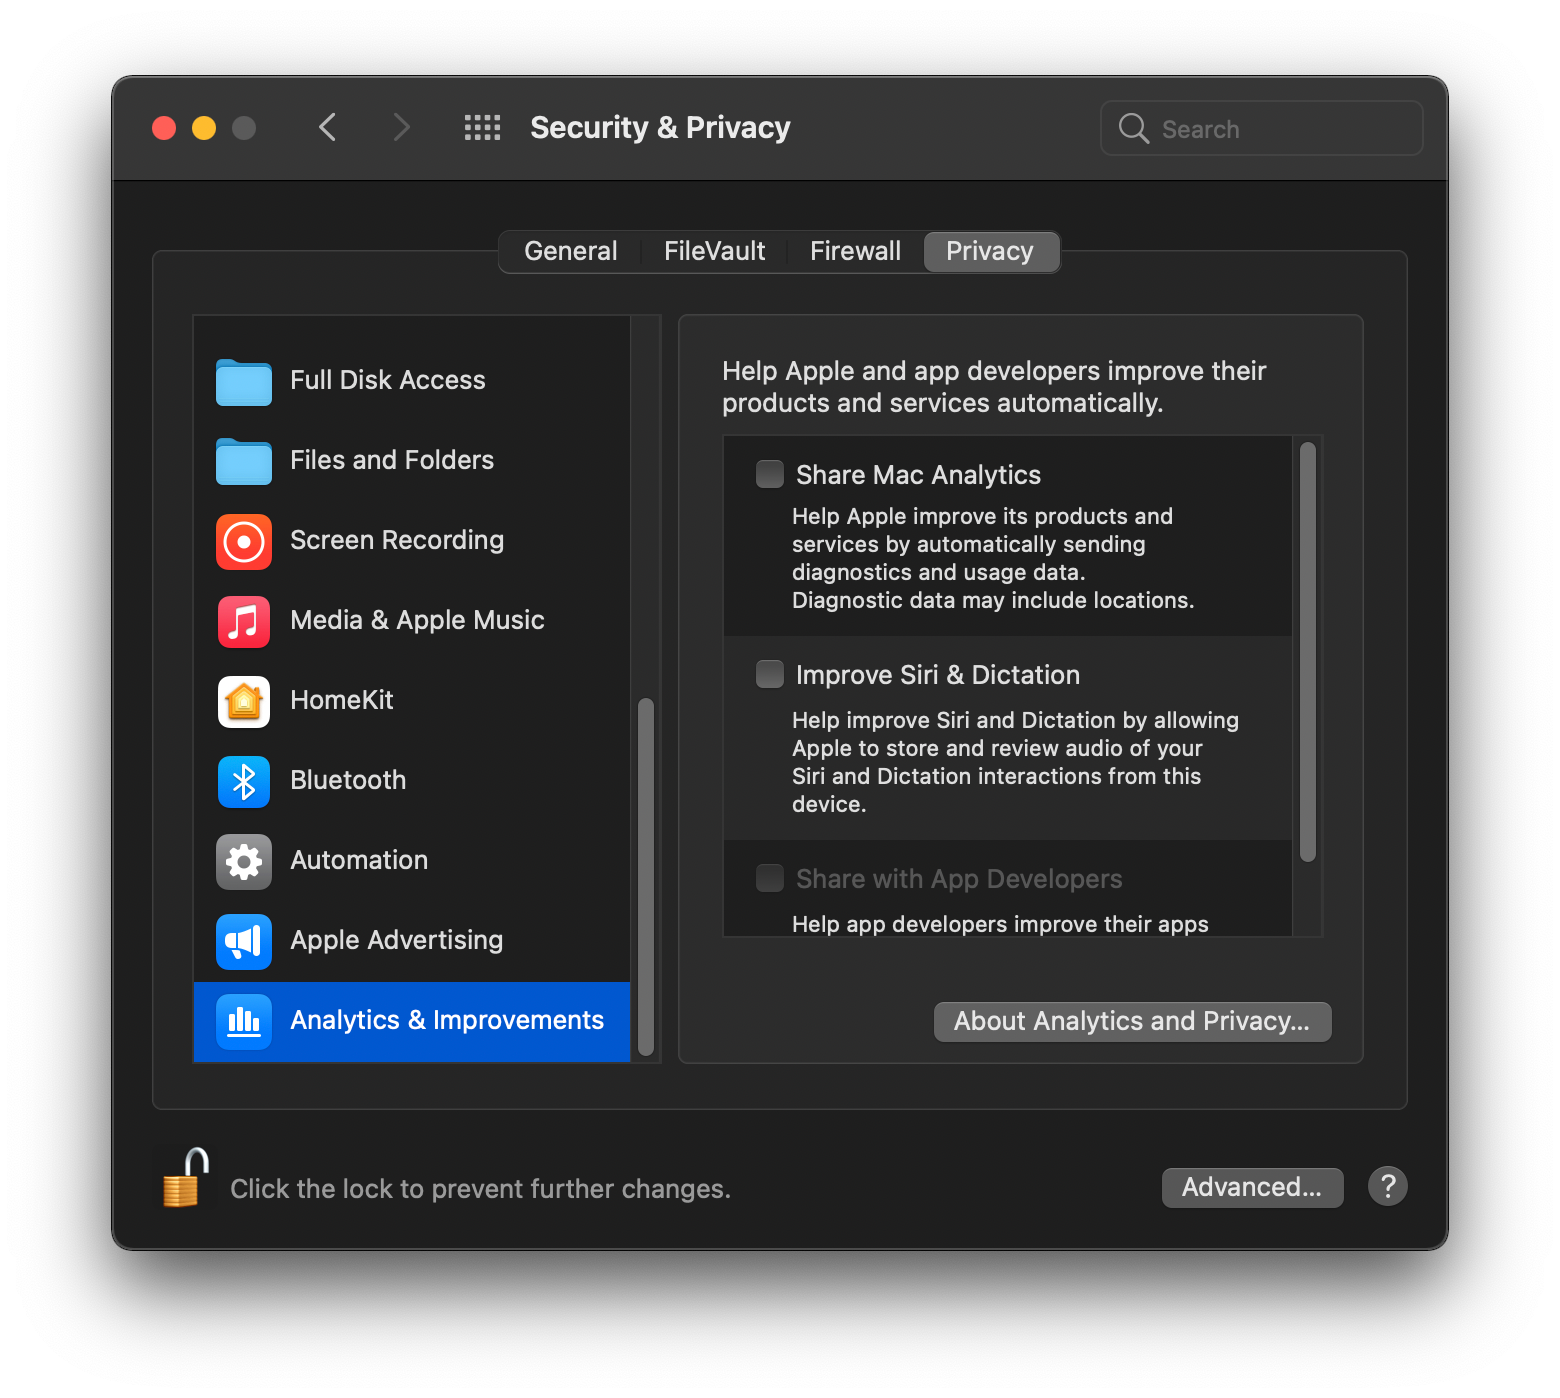 Share Mac Analytics settings on macOS